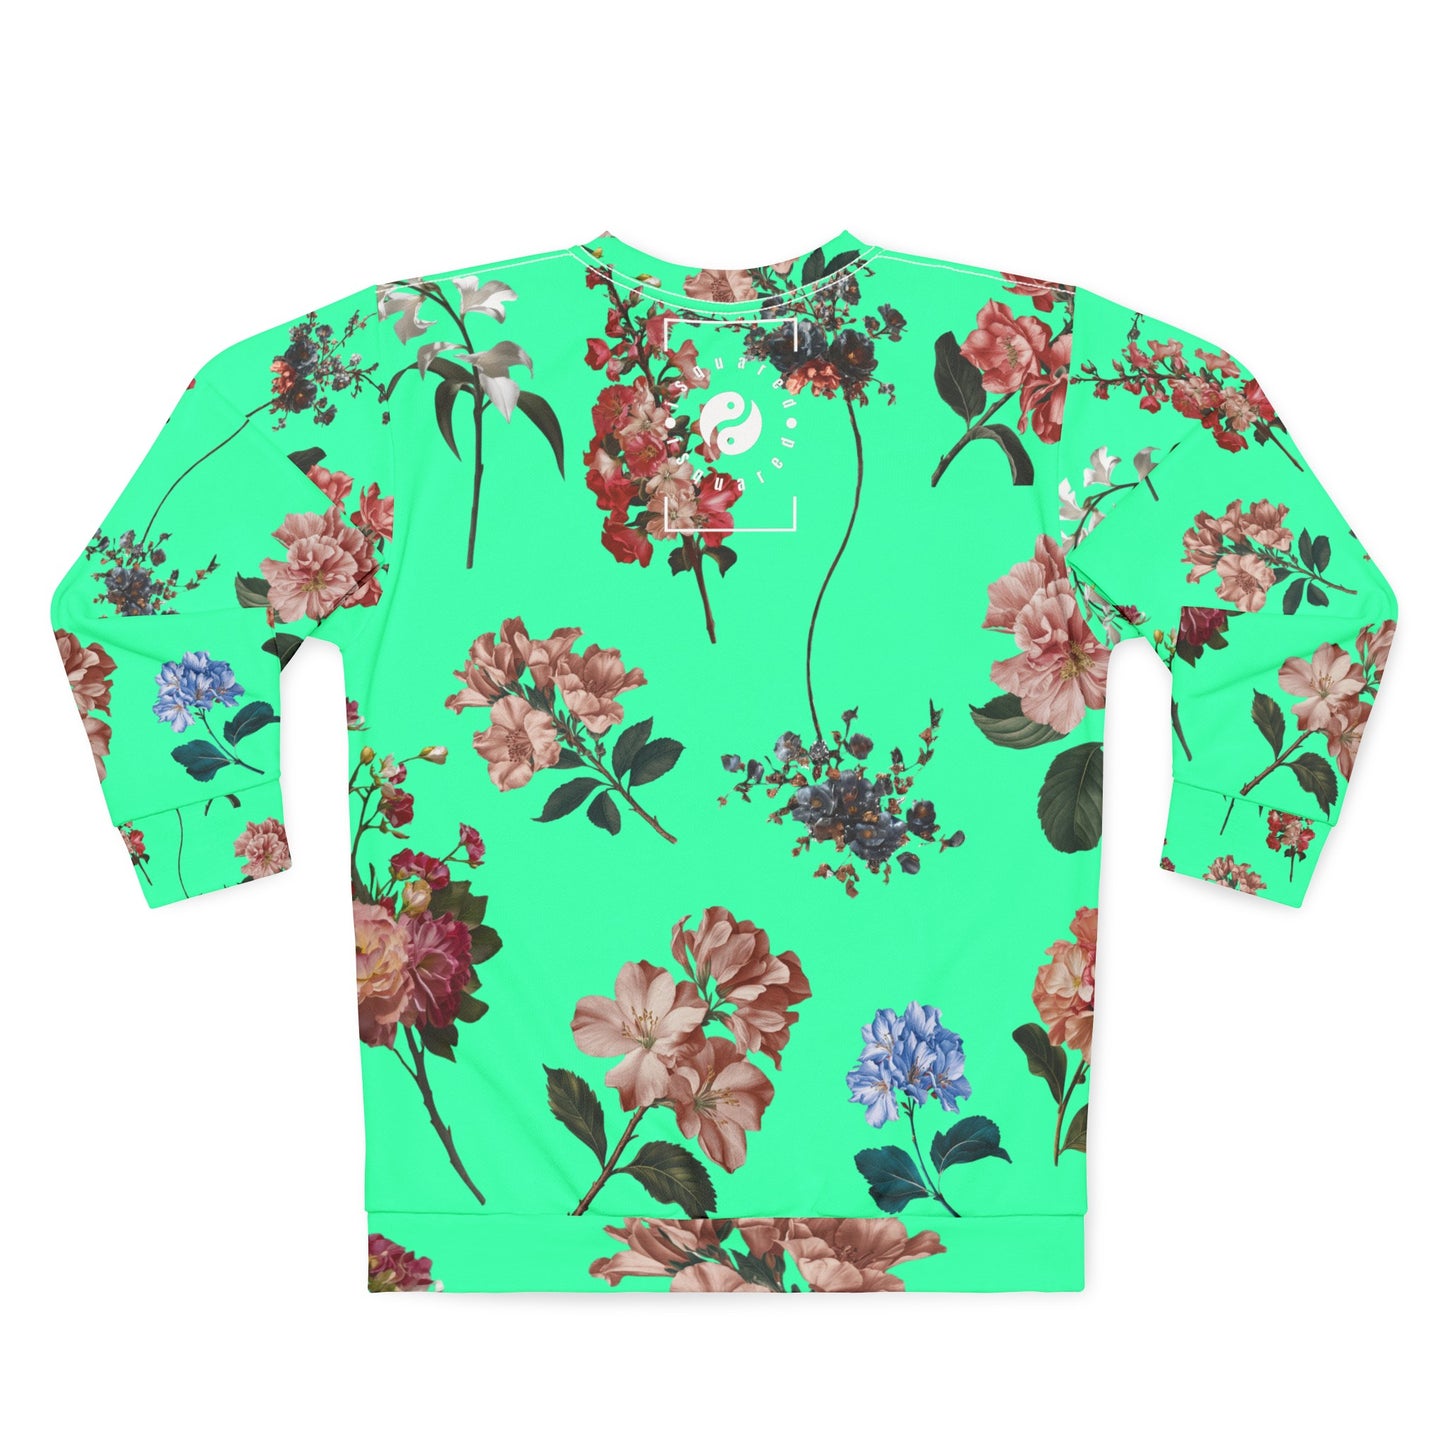 Botaniques sur Turquoise - Sweat-shirt unisexe